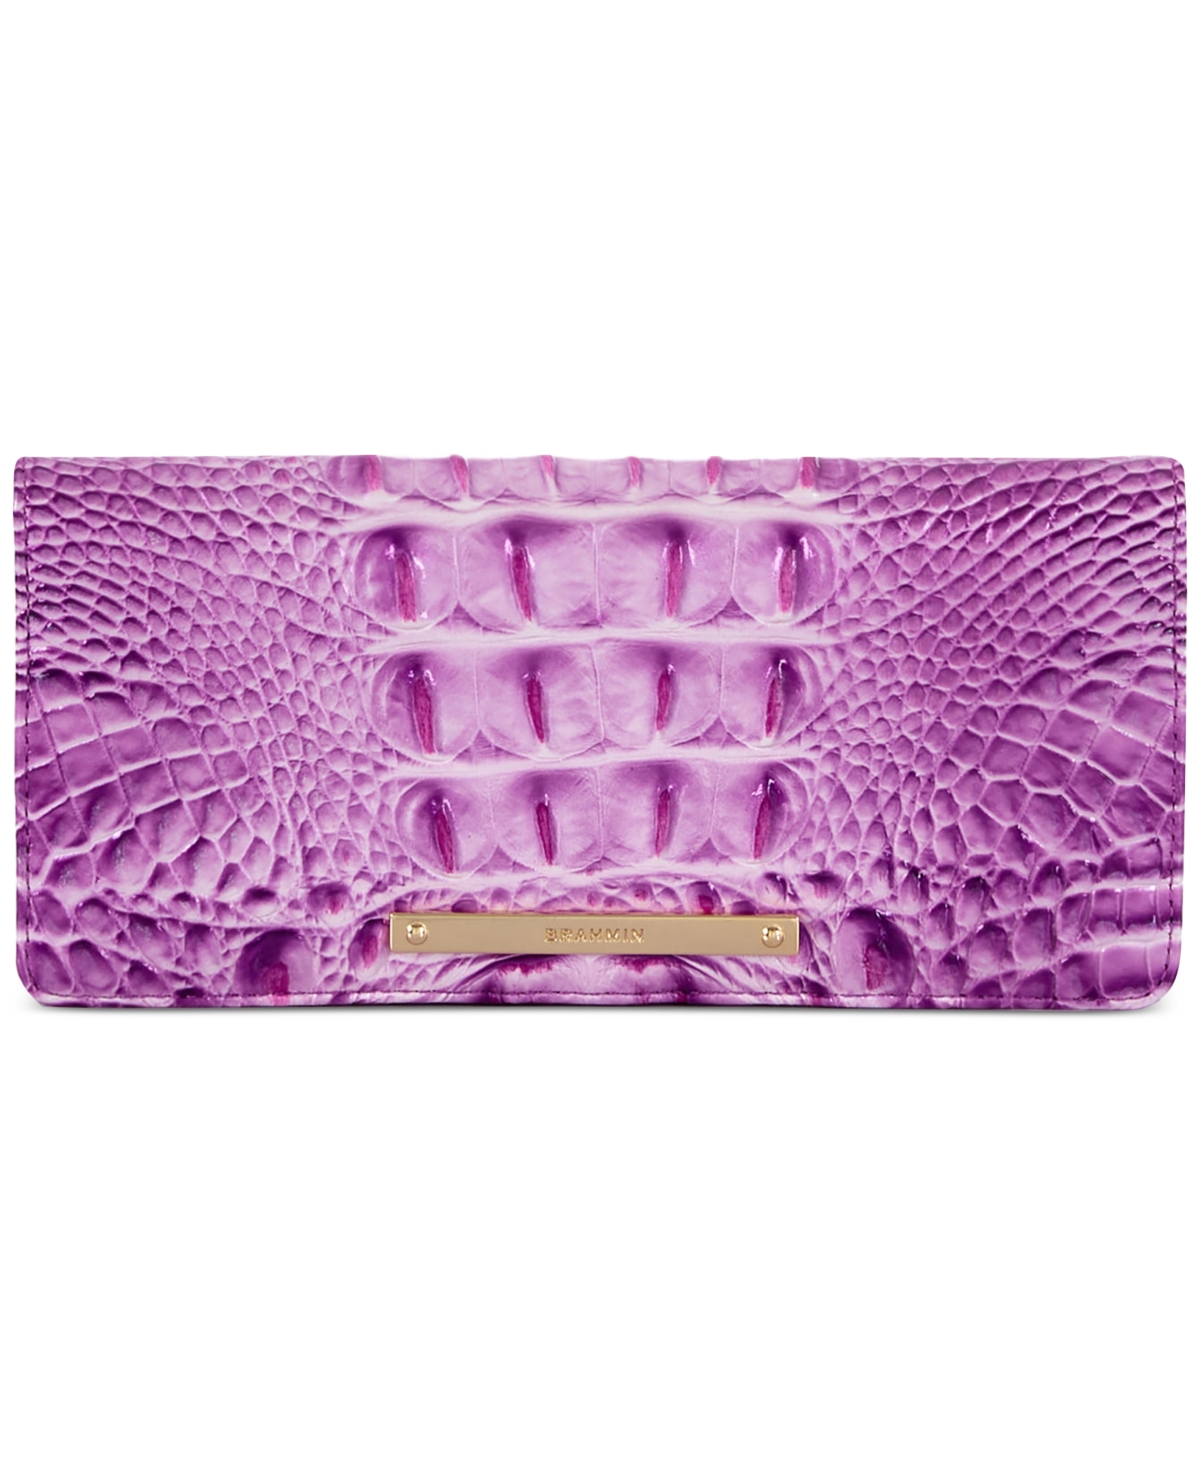 Brahmin Ady Leather Wallet In Lilac Esse